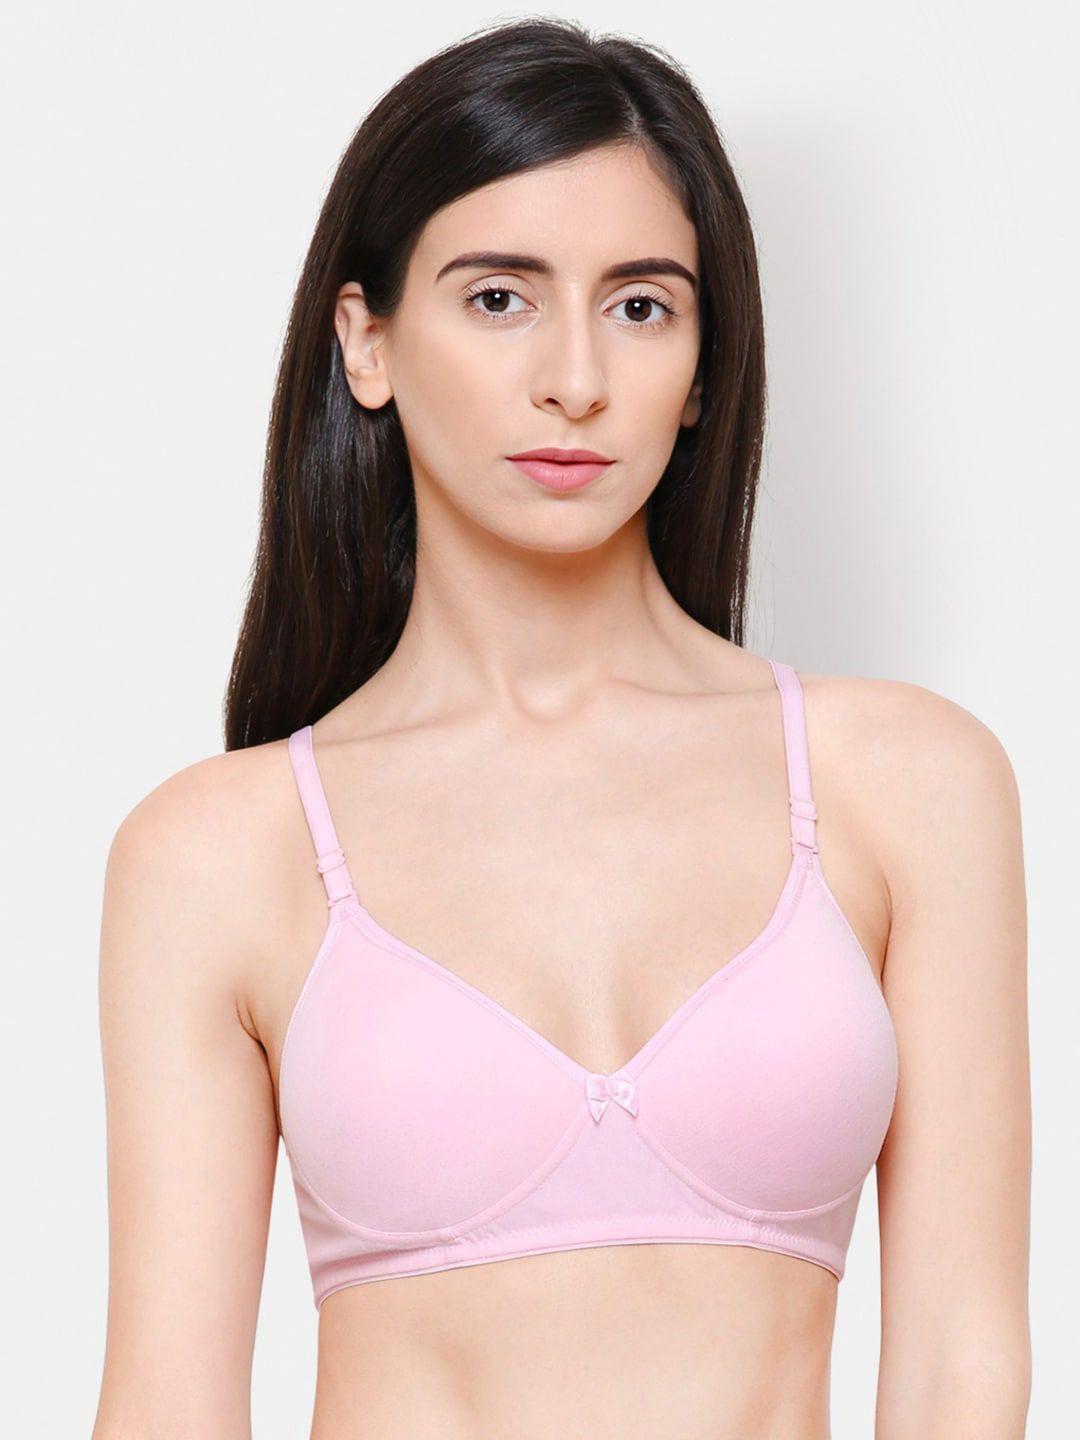 college girl women pink bra heavily padded